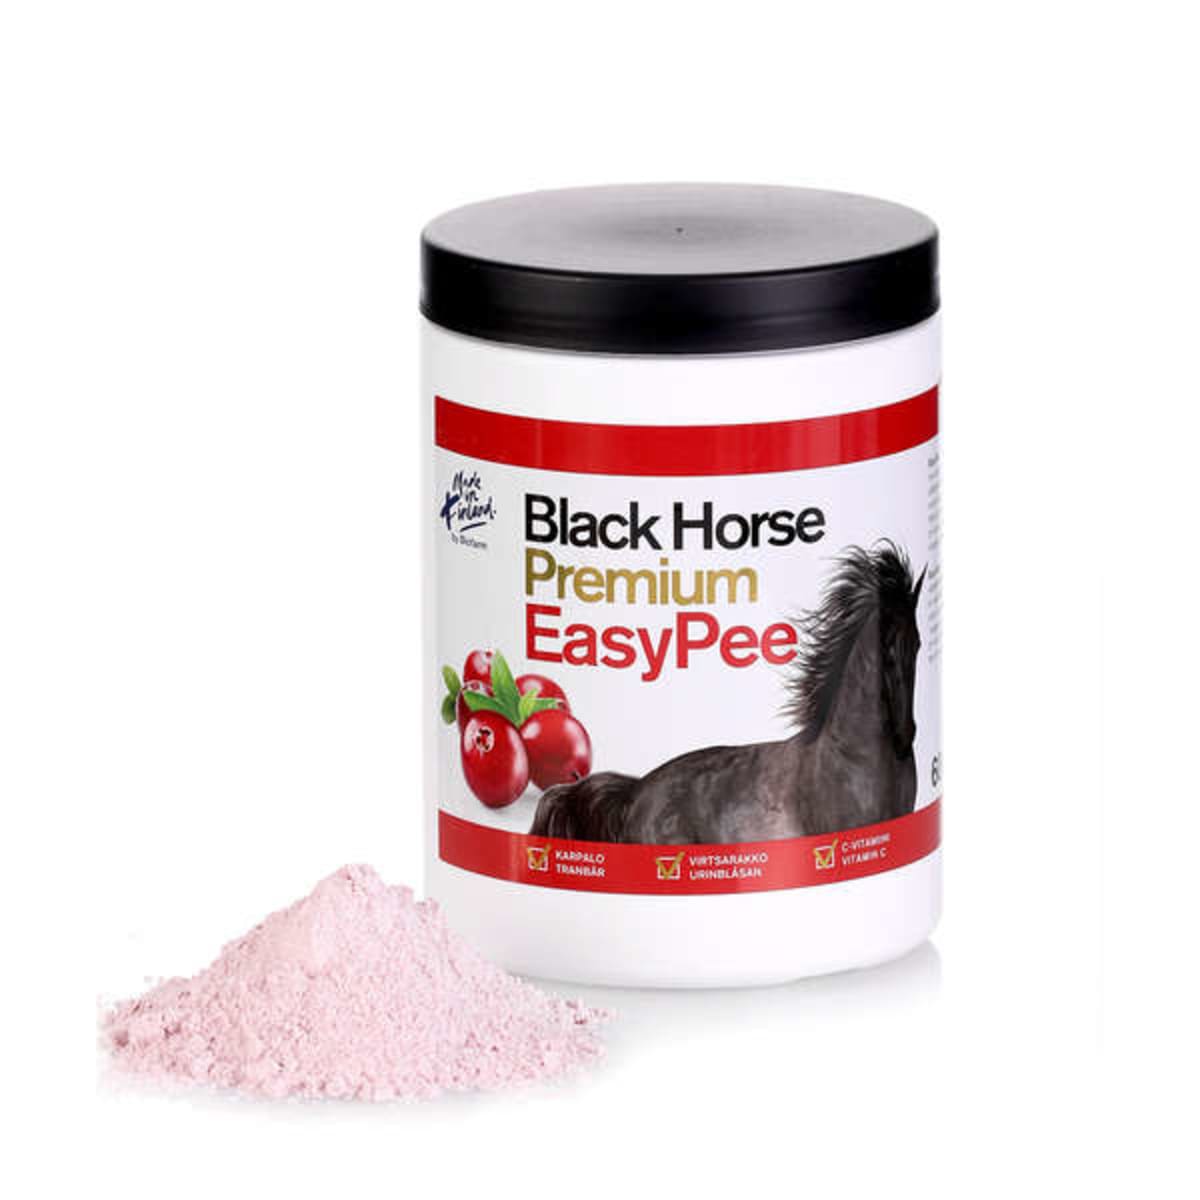 Black Horse Premium EasyPee 0,6 kg hevosen täydennysrehu   verkkokauppa